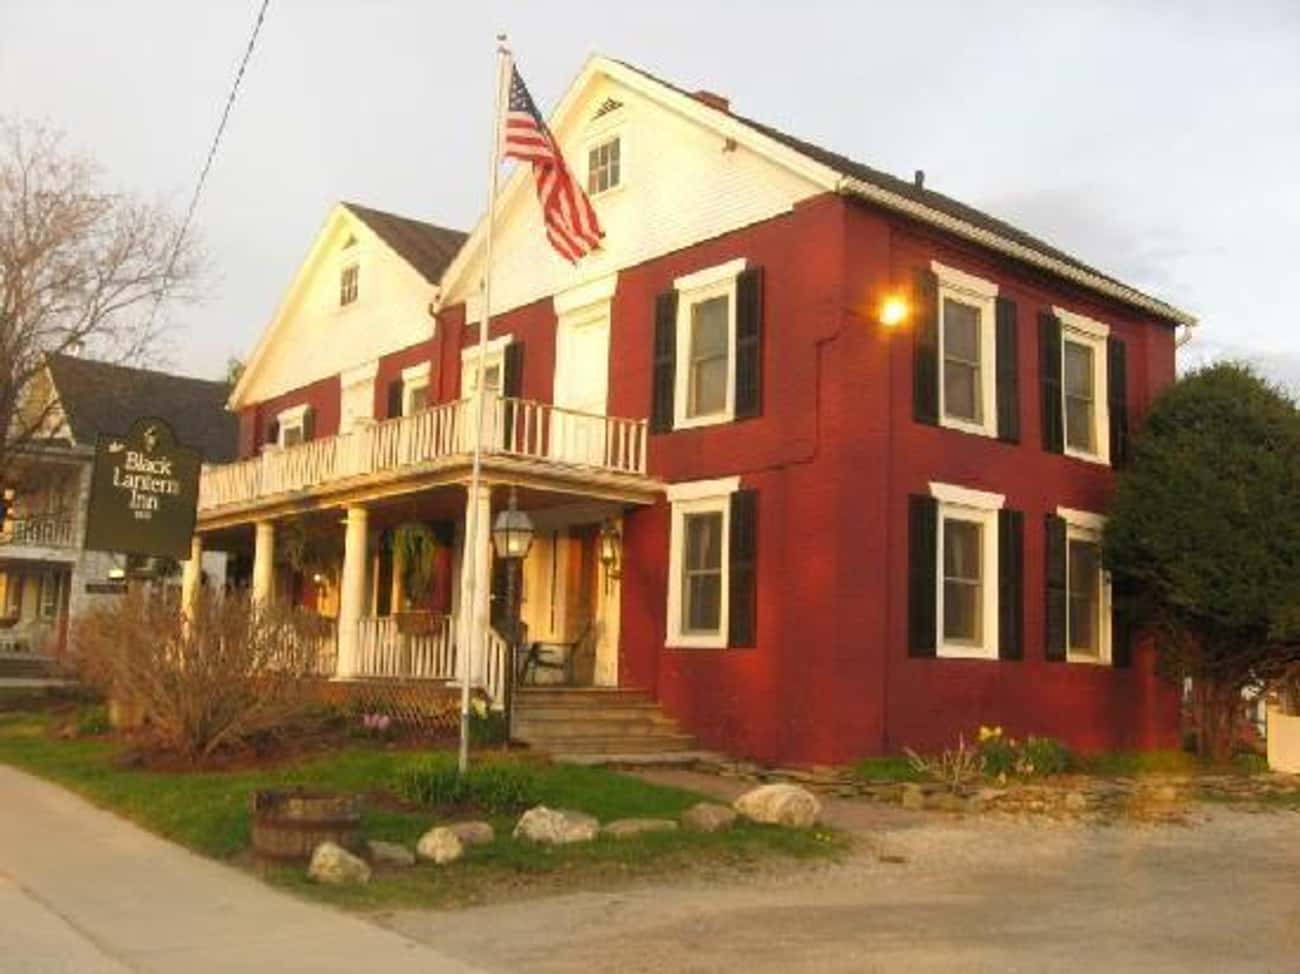 Vermont: The Black Lantern Inn